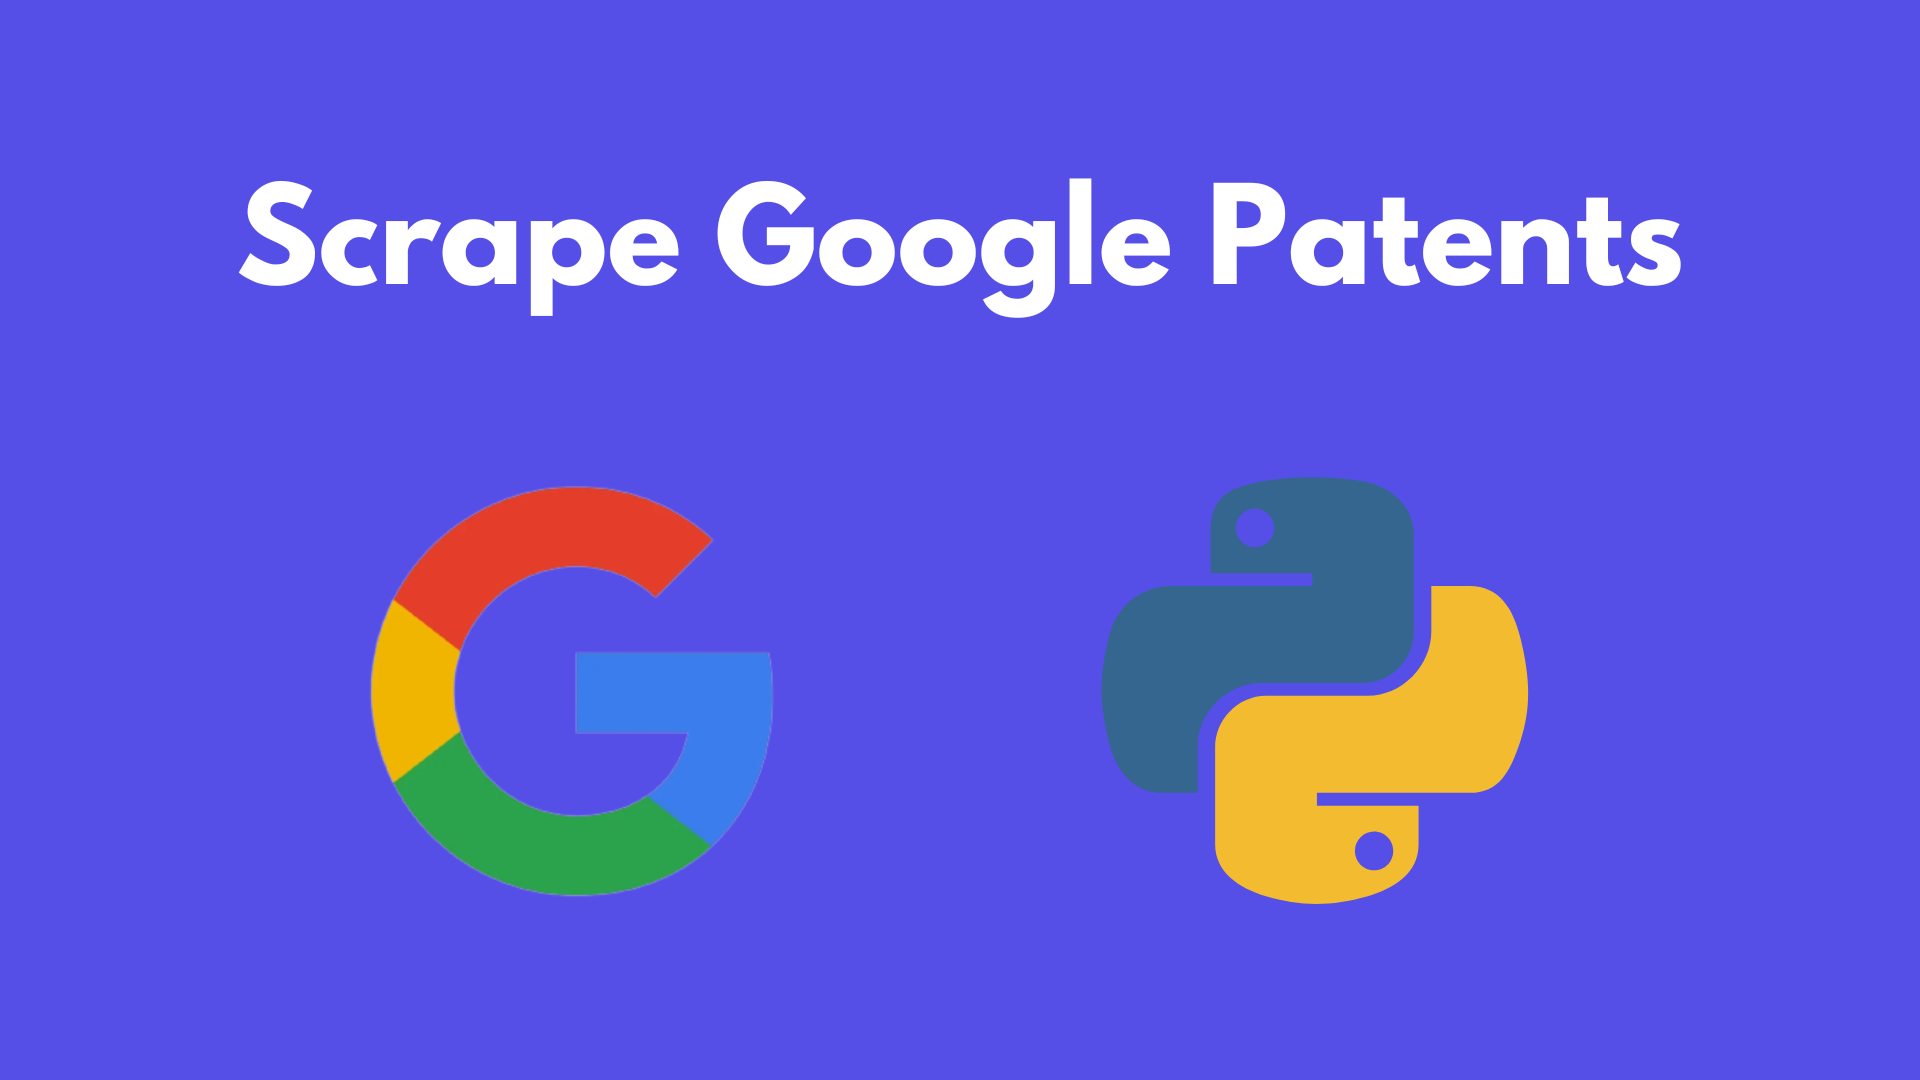 How to scrape Google Patents